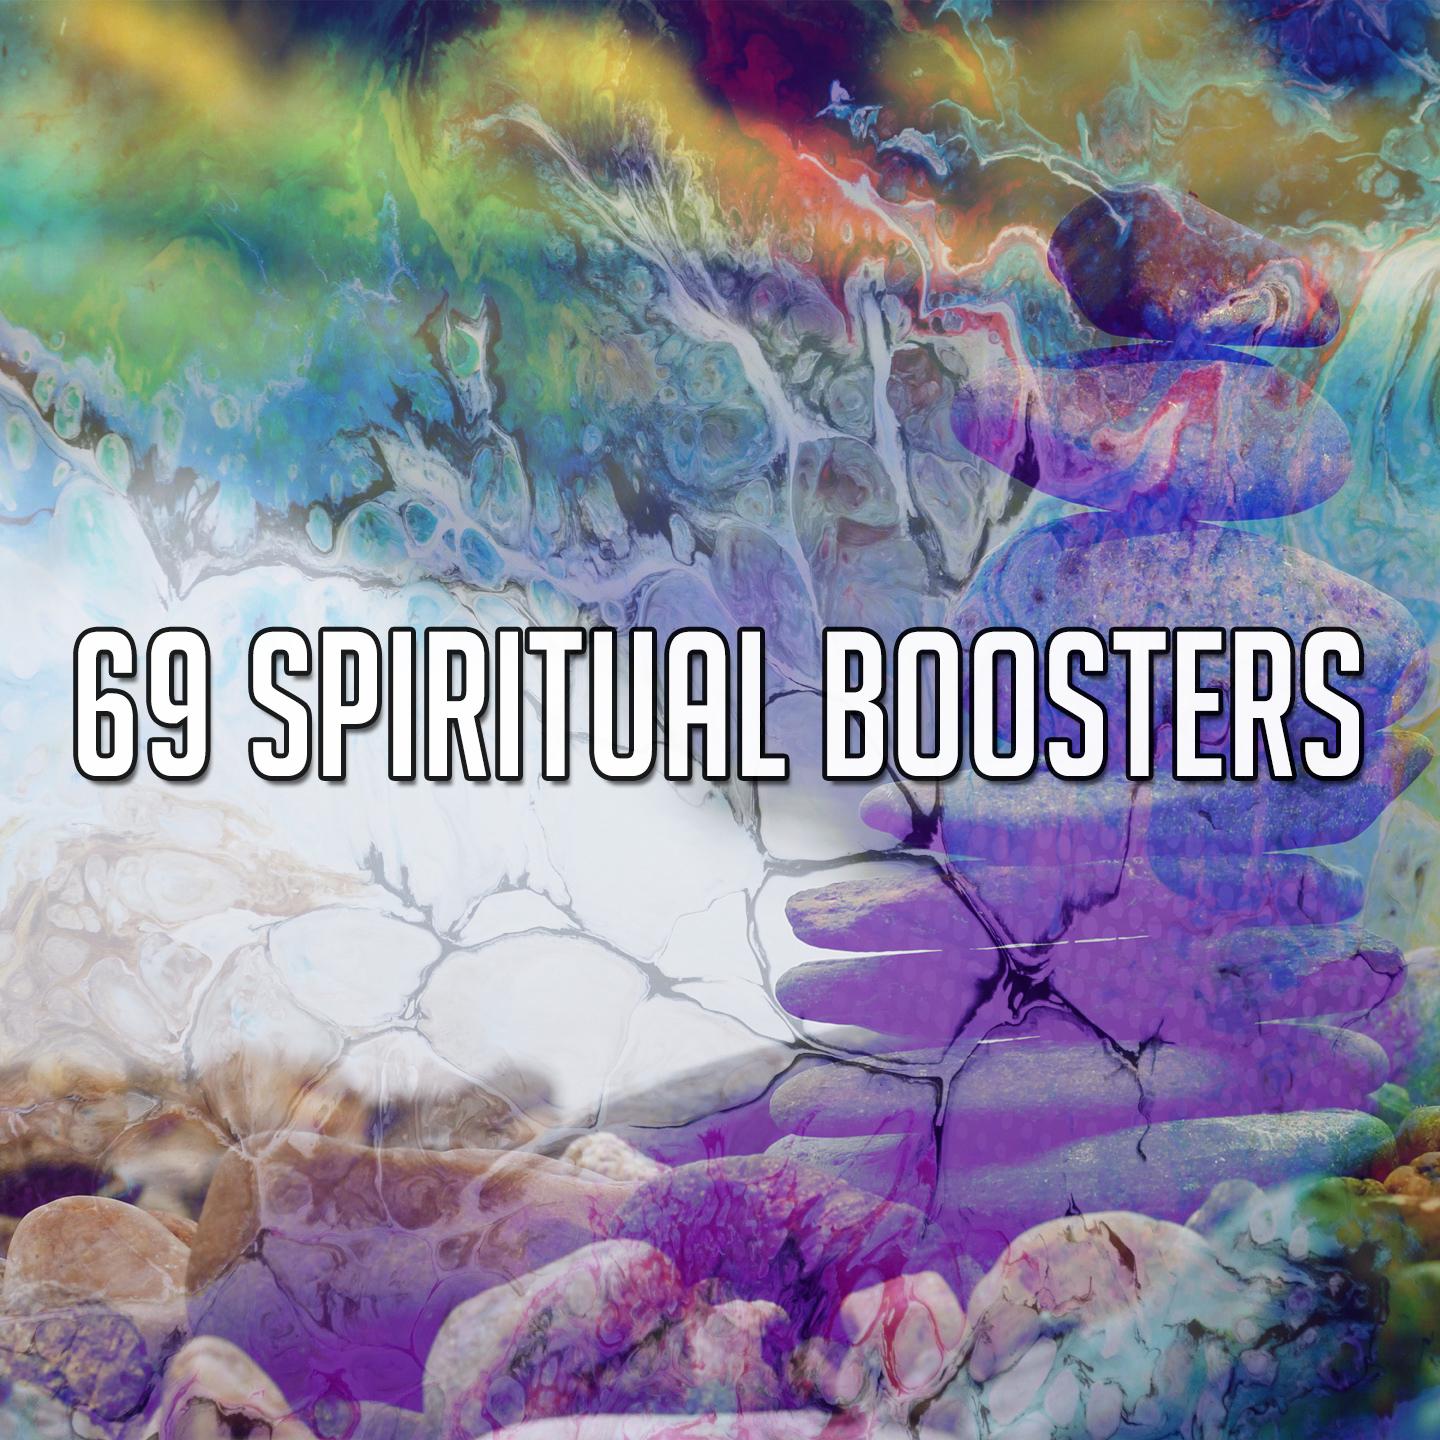 69 Spiritual Boosters